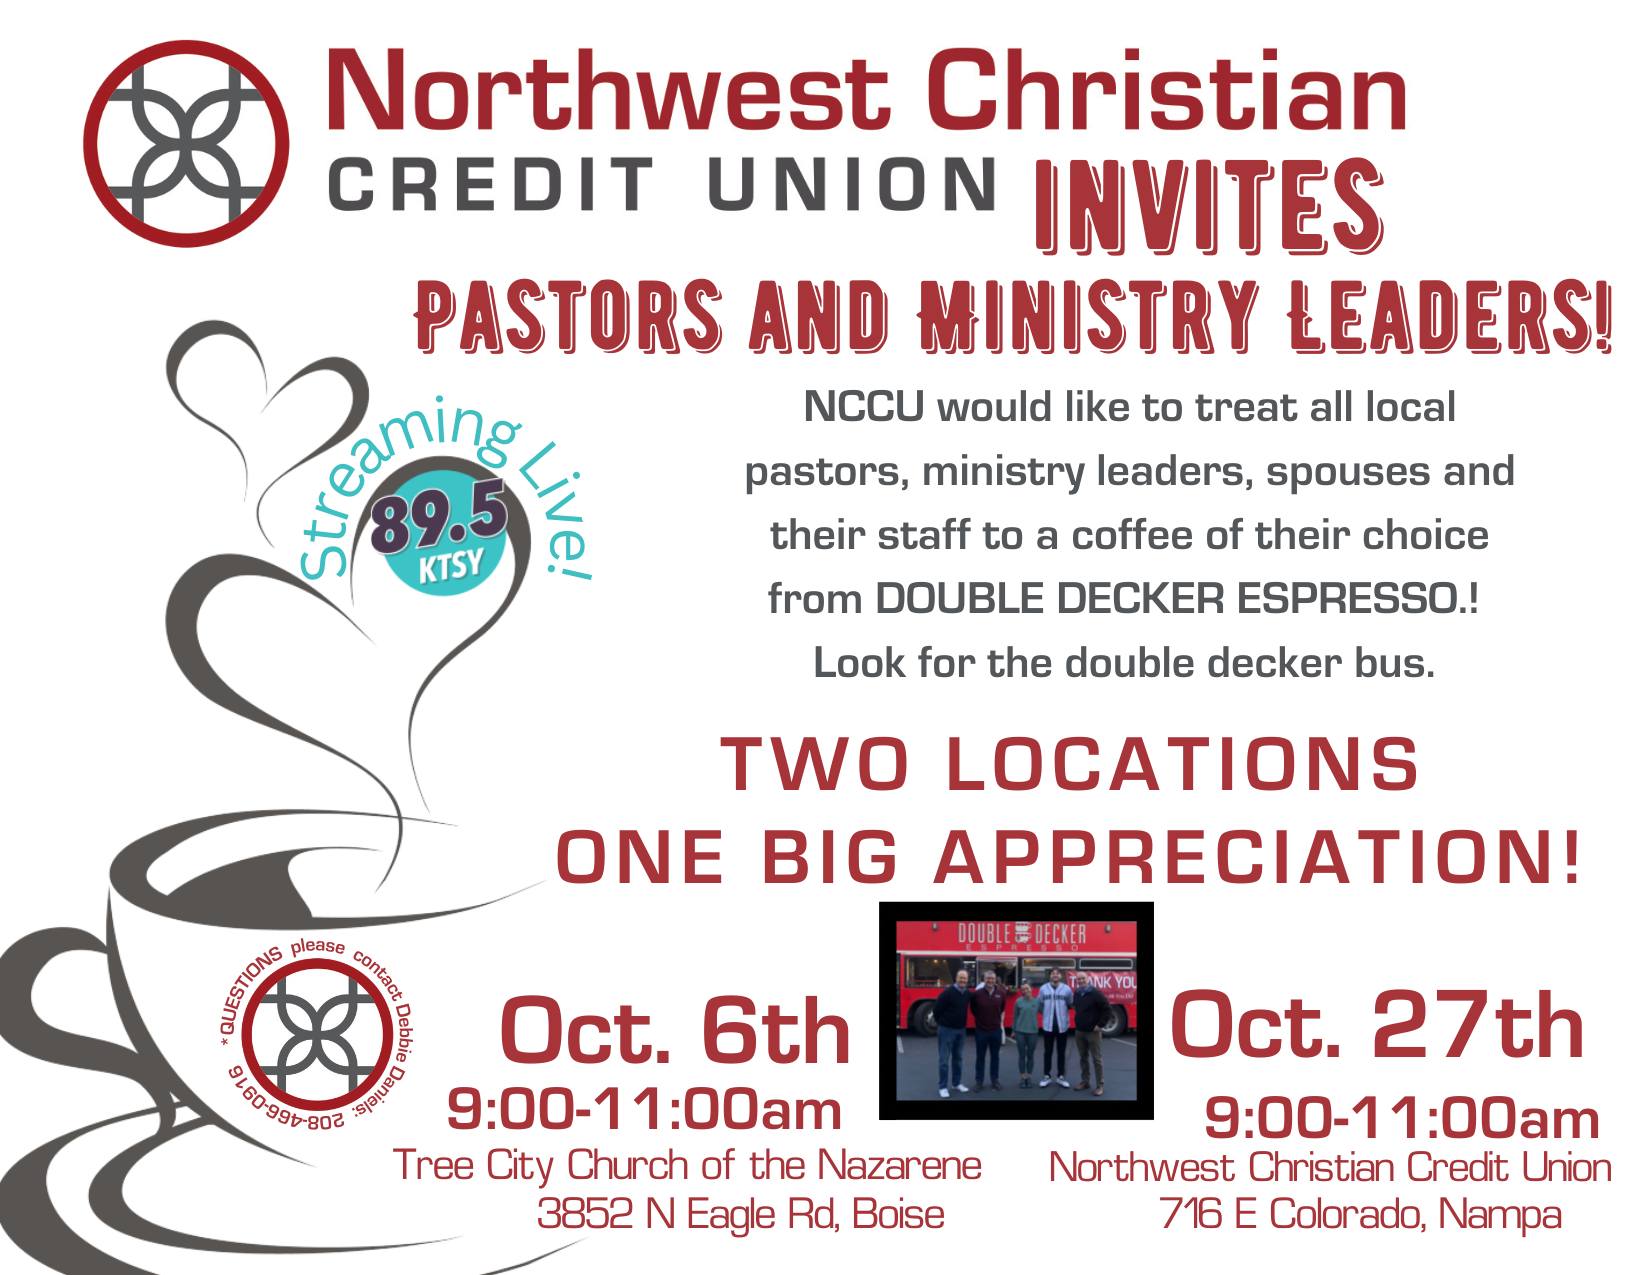 Northwest Christian Credit Union